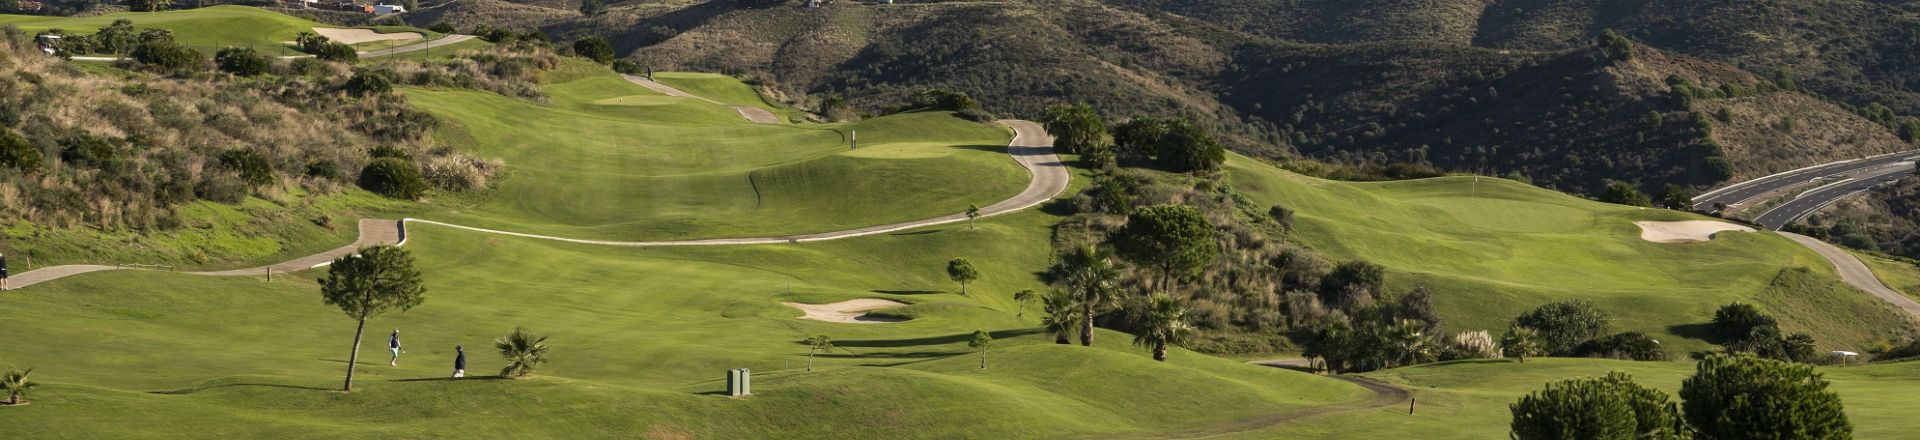 Play golf in Spain at Calanova Golf Club